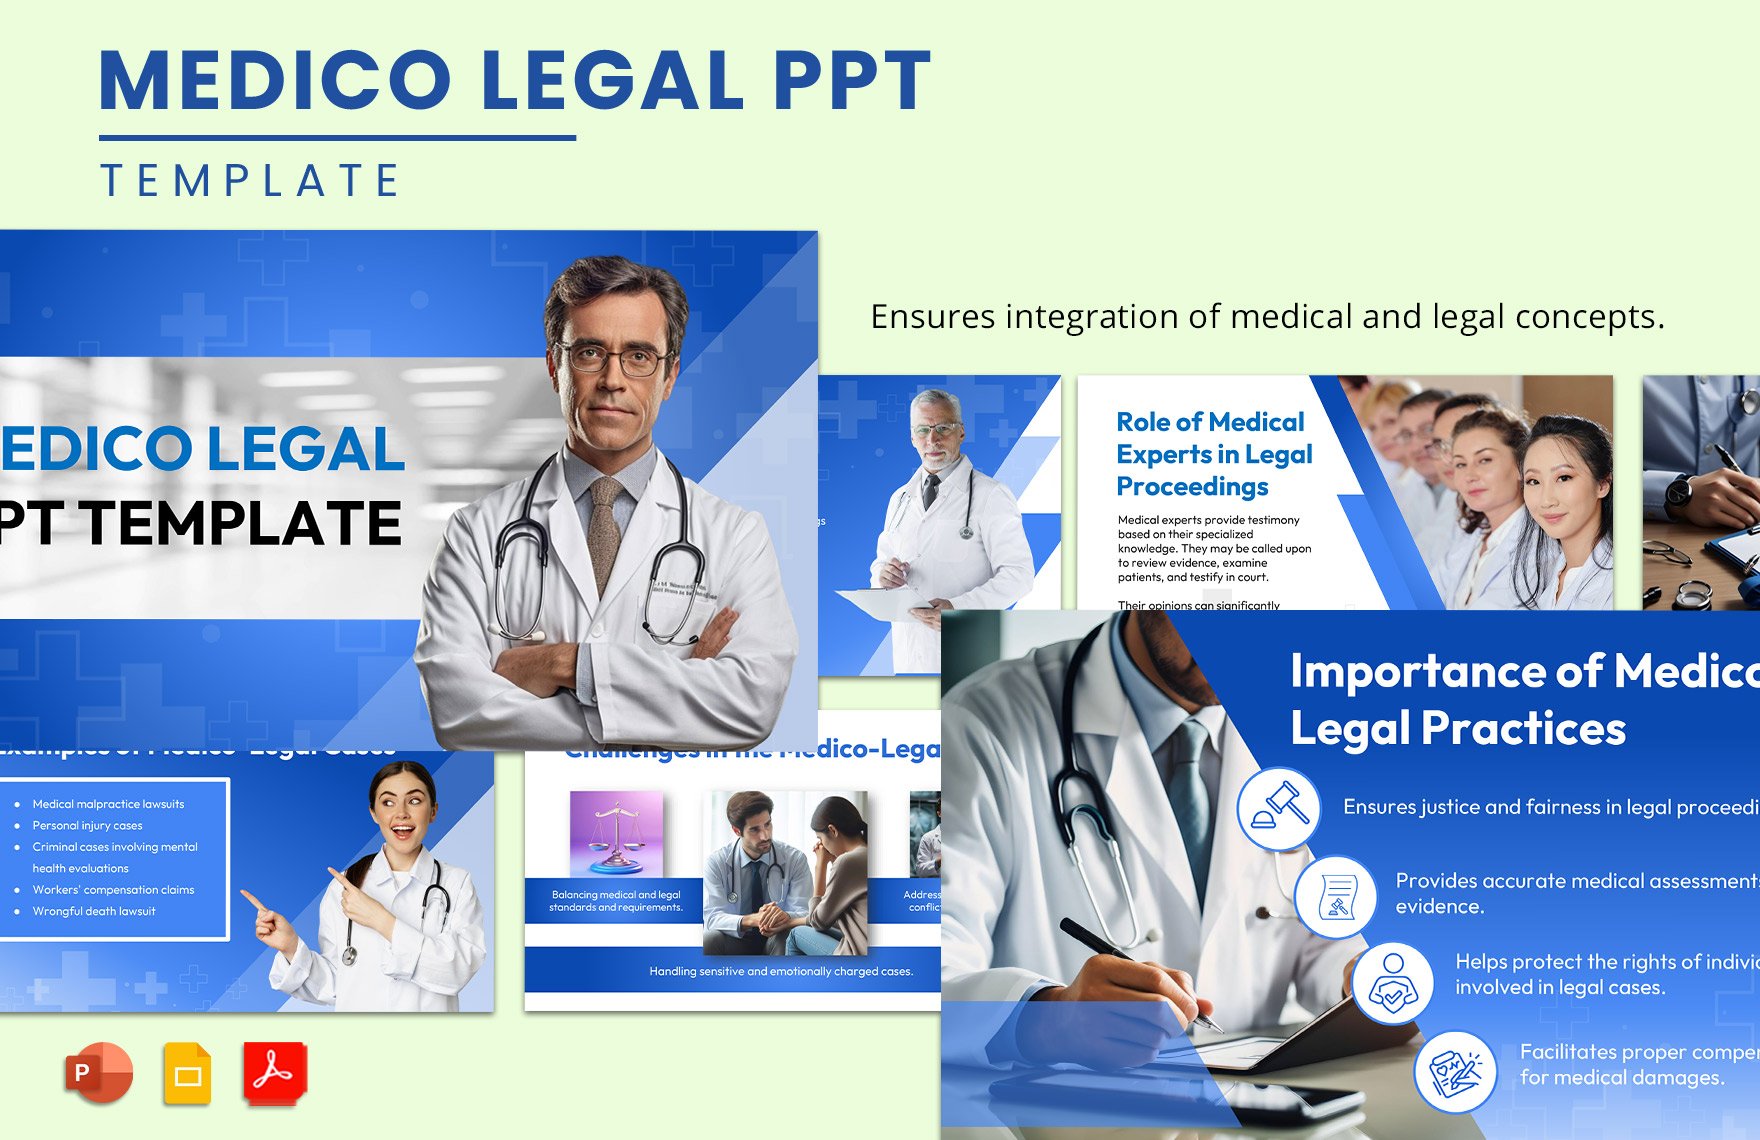 Medico Legal PPT Template